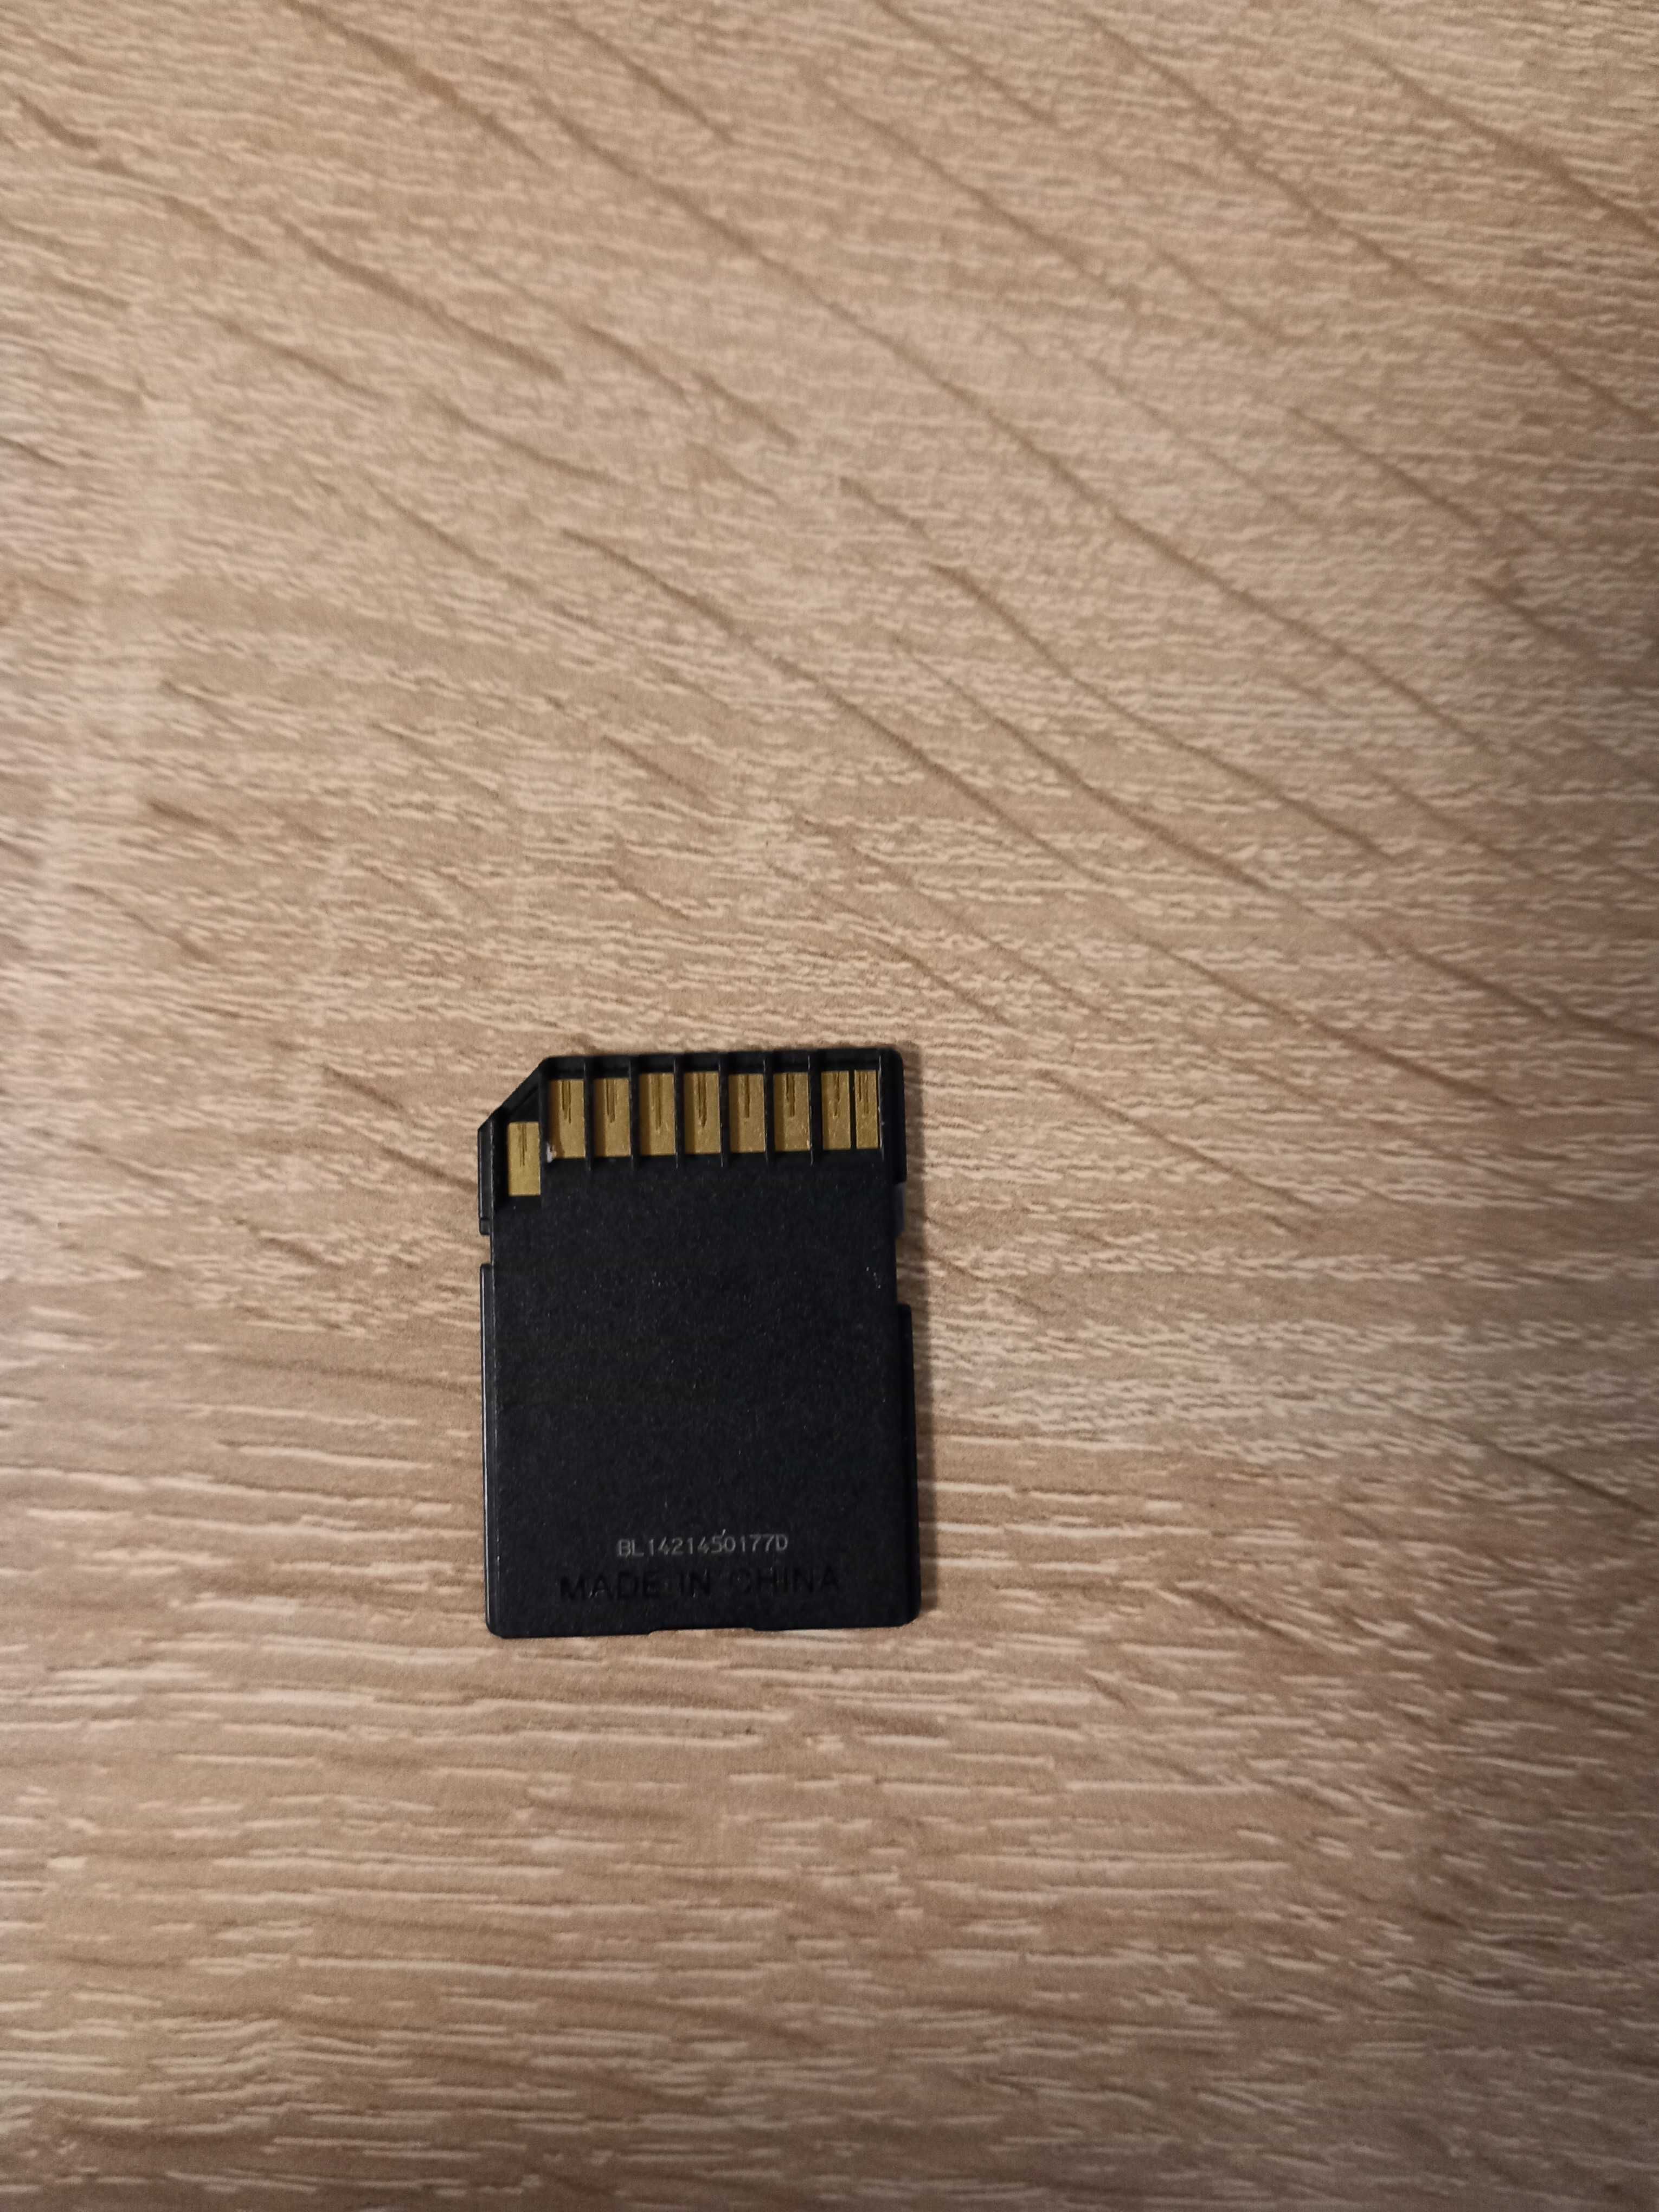 SanDisk SDHC, 16GB, Ultra, Class 10  30mb/s 16GB. Numai 5 lei